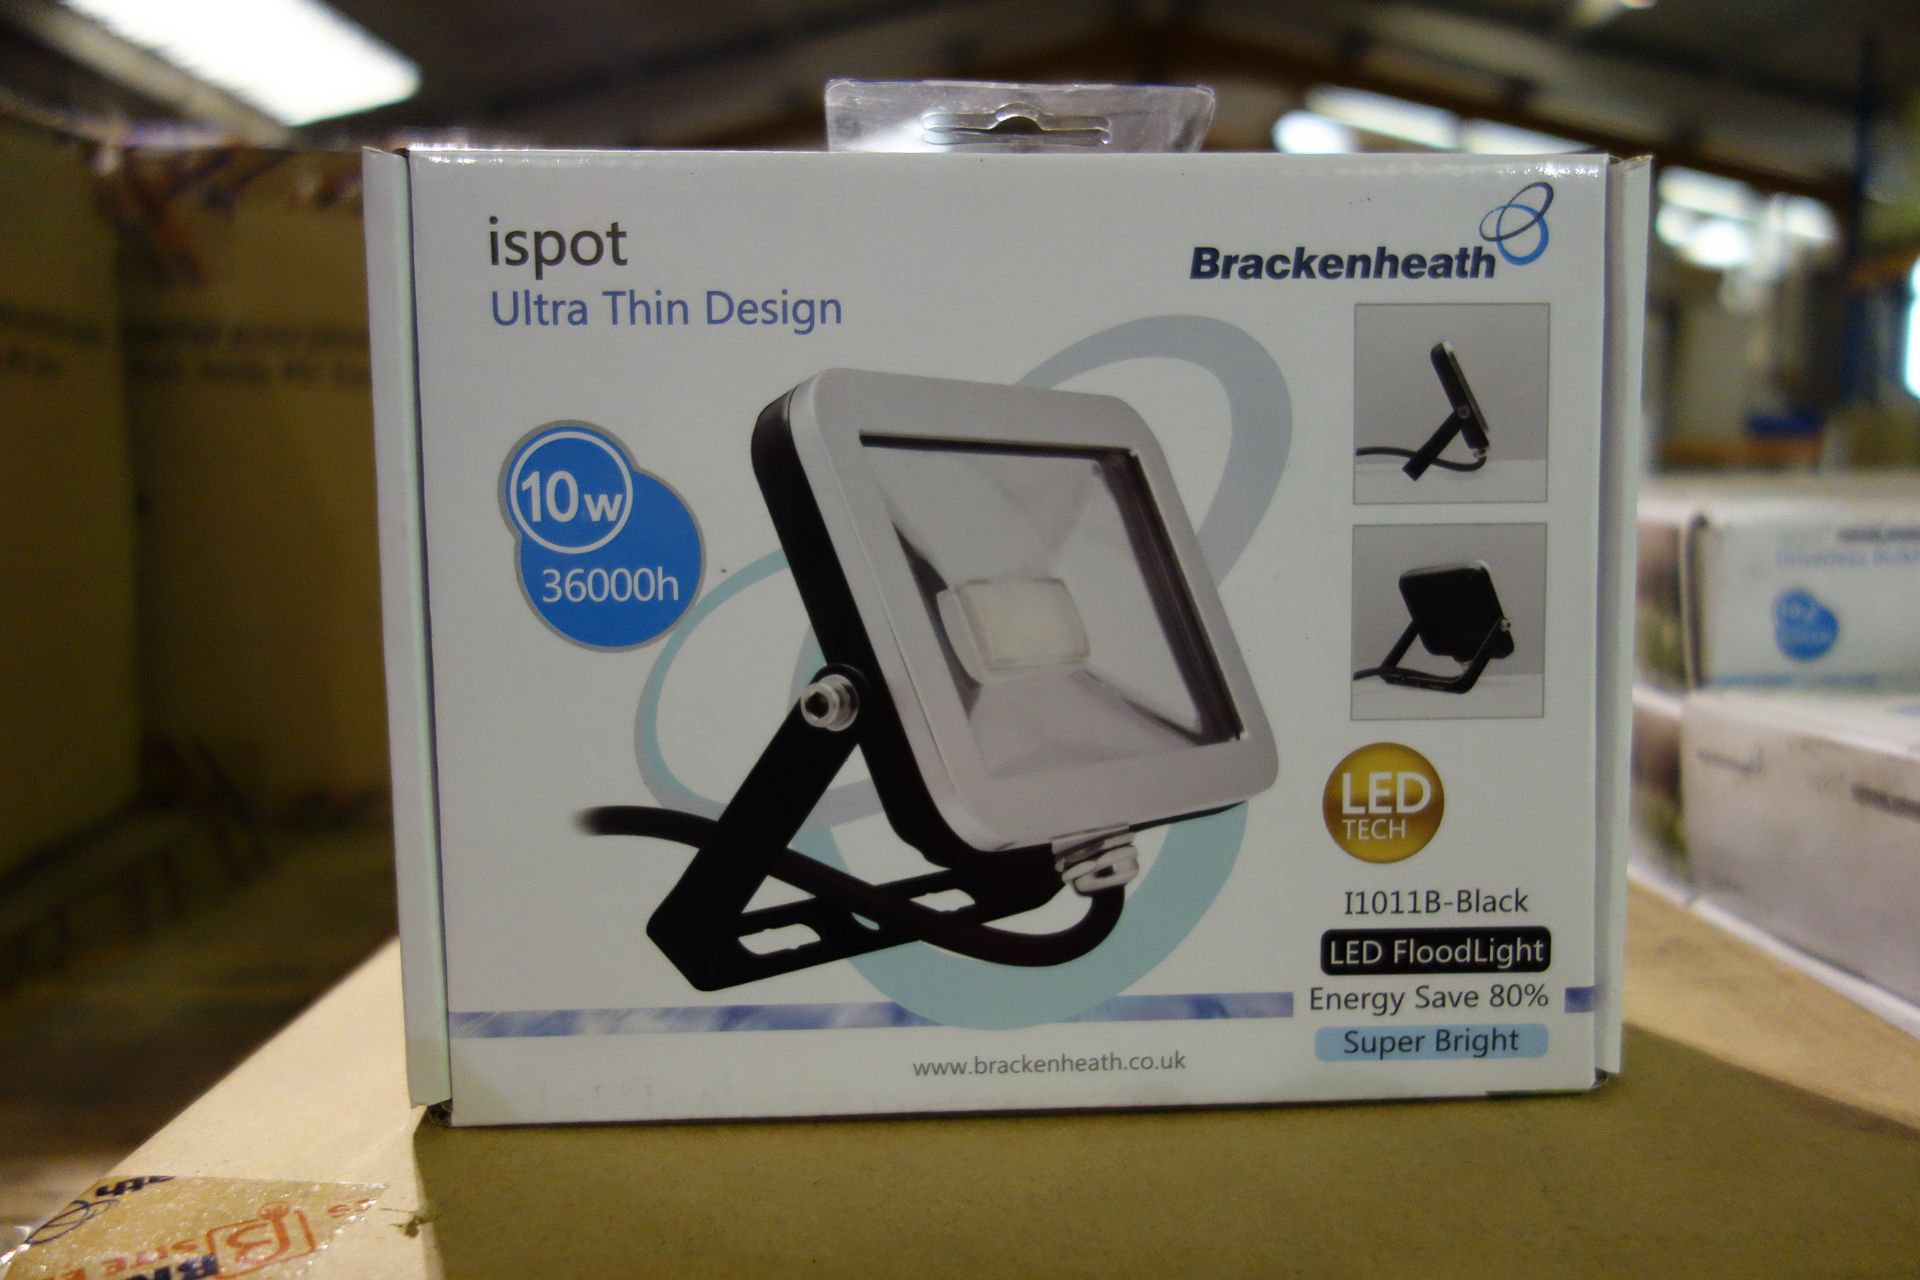 15 X Brakenheath I1011B-Black 10W LED Floodlight Super Bright Ultra Thin Design